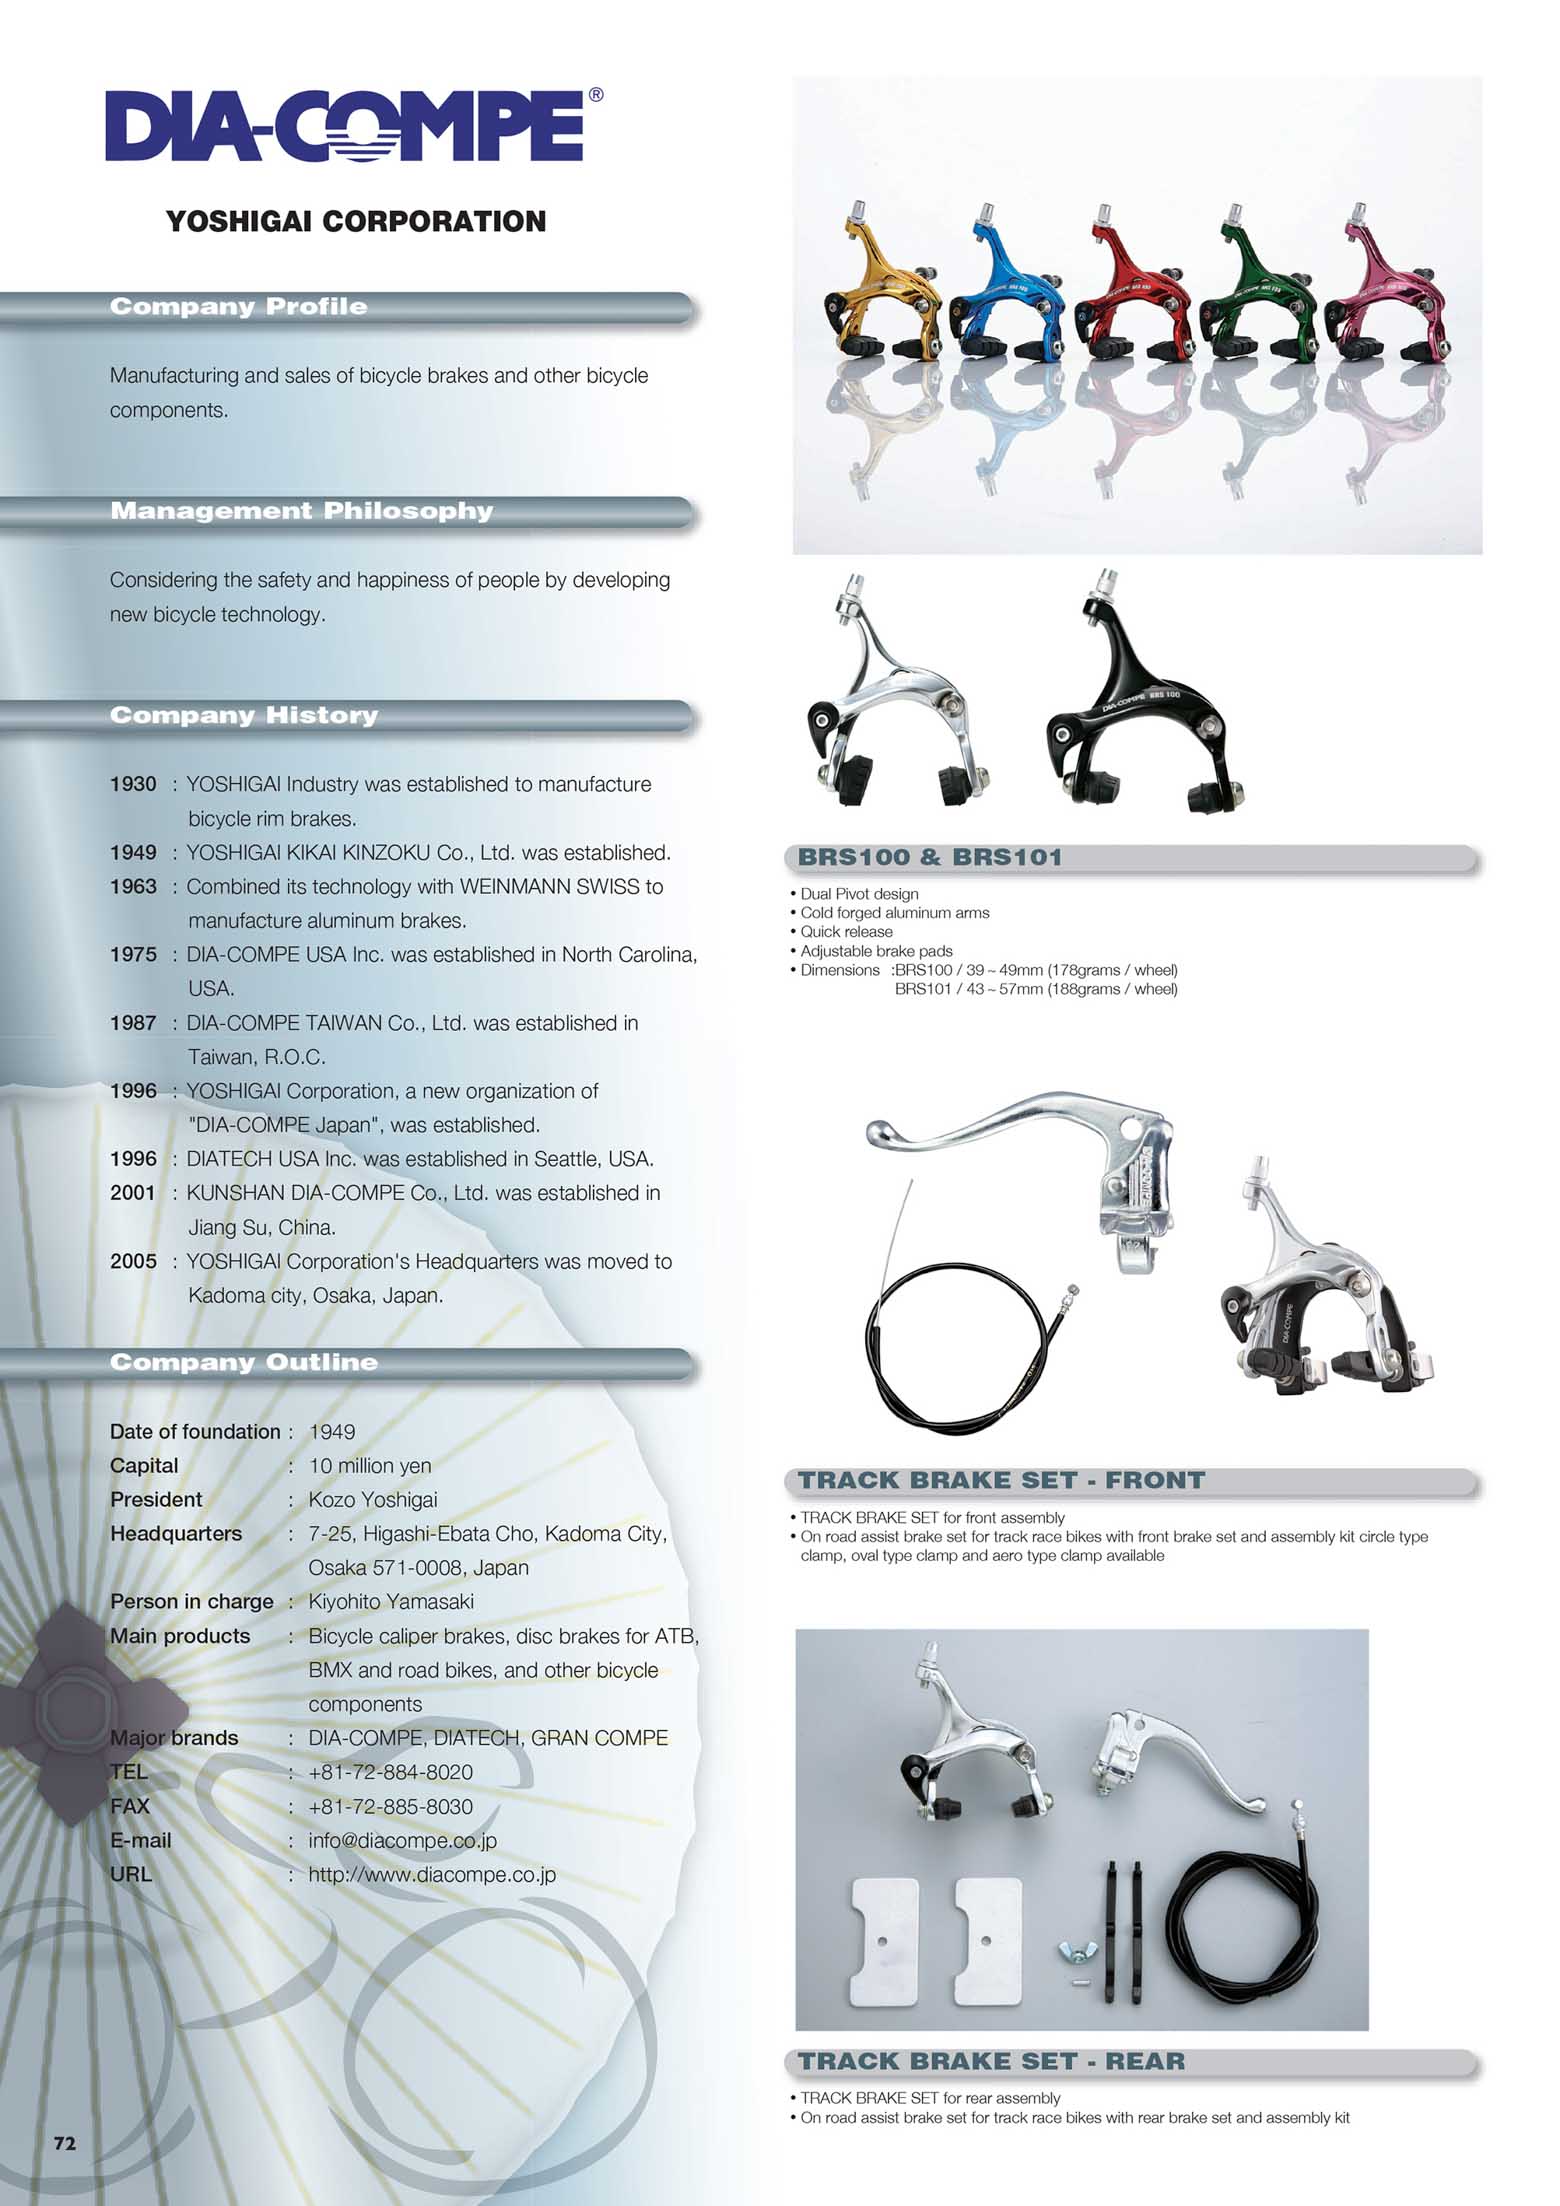 Dia-Compe pdf catalogue 2014? image 1 main image